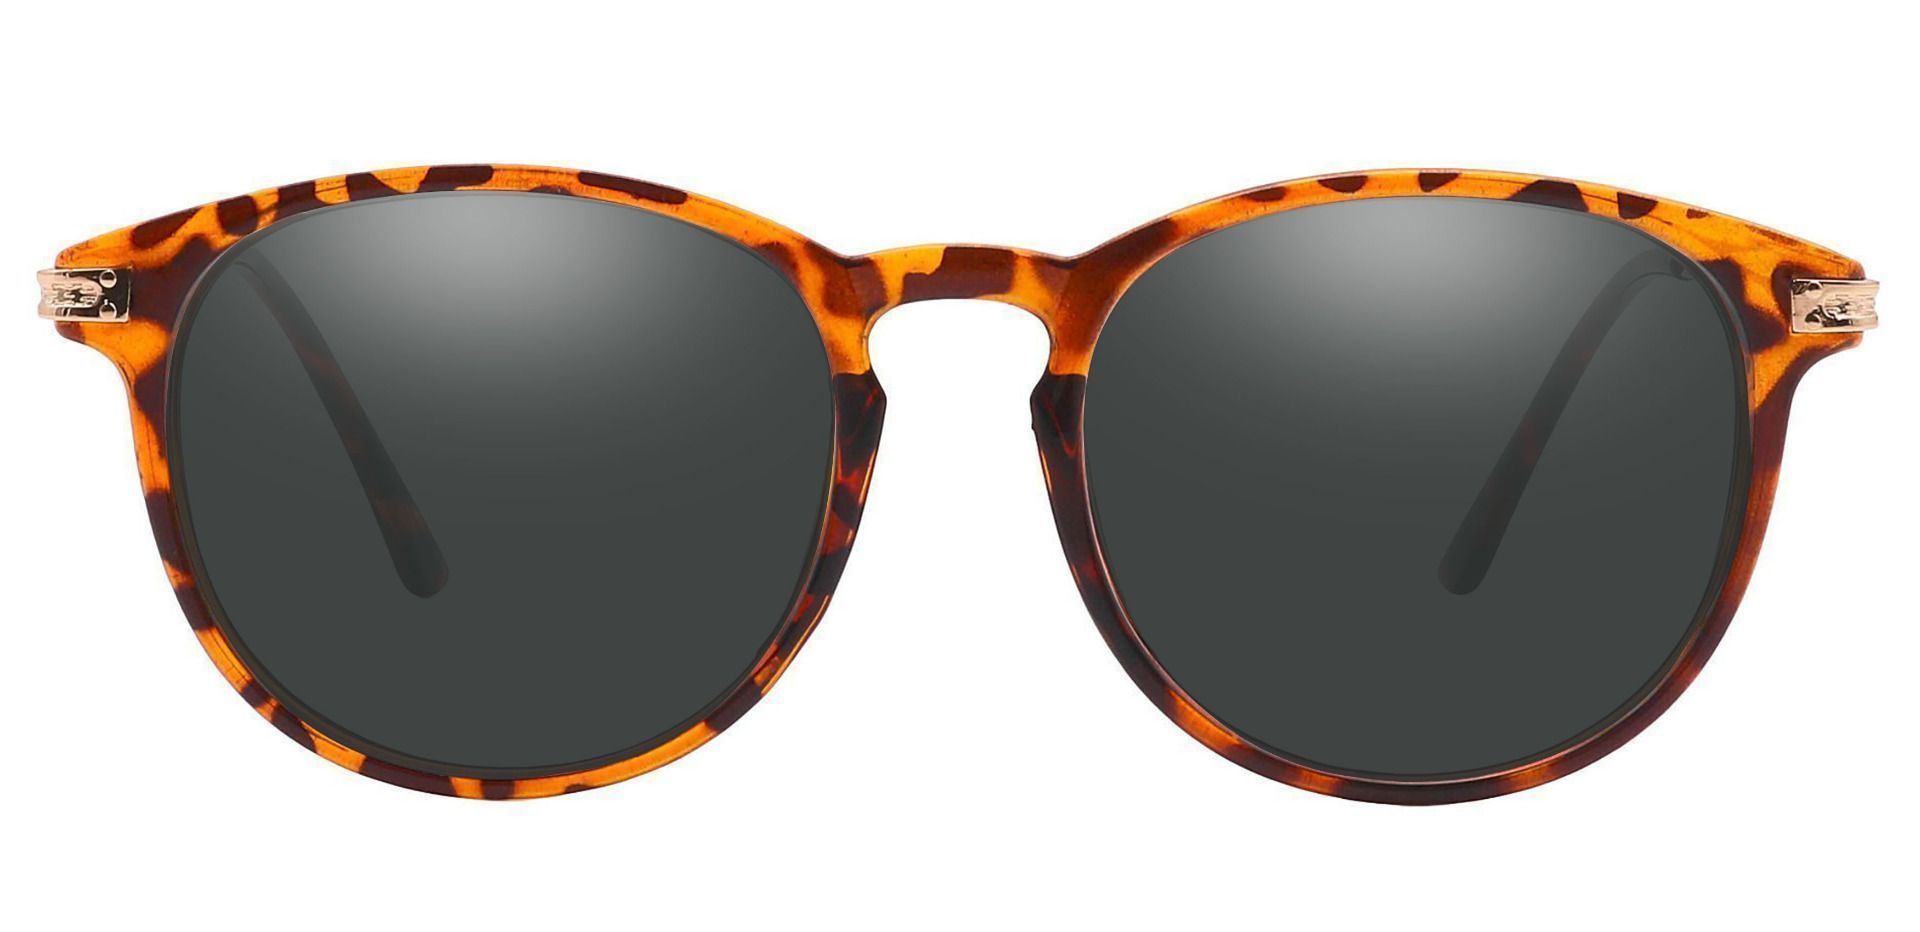 Rojo Round Reading Sunglasses - Tortoise Frame With Gray Lenses